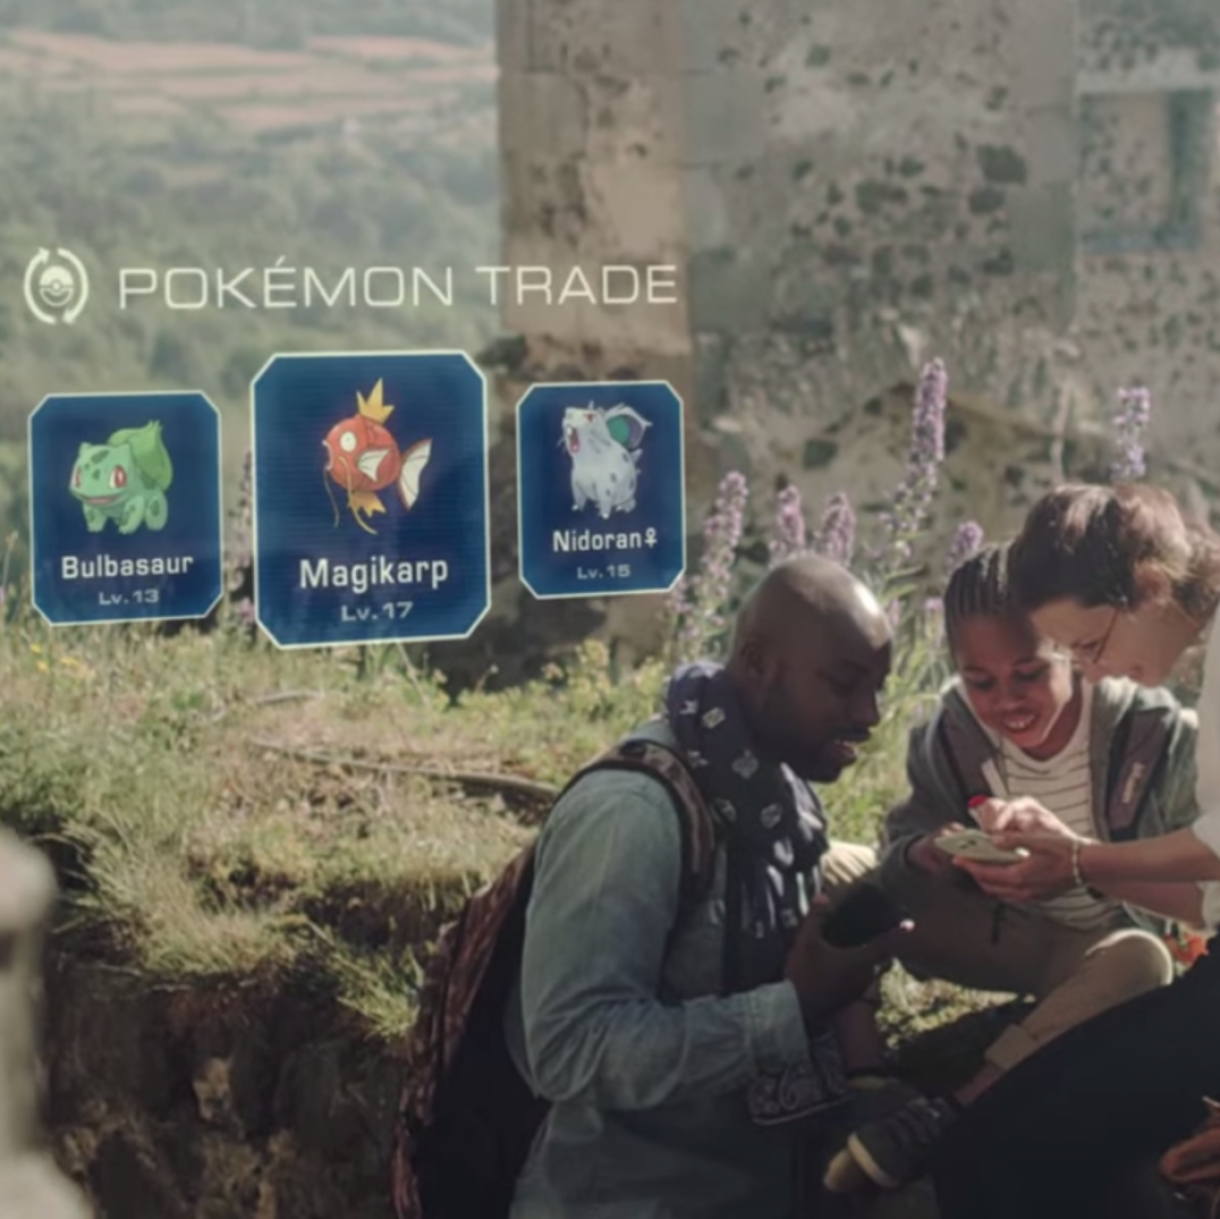 Pokémon GO: Catch 'Em All in Real Life!